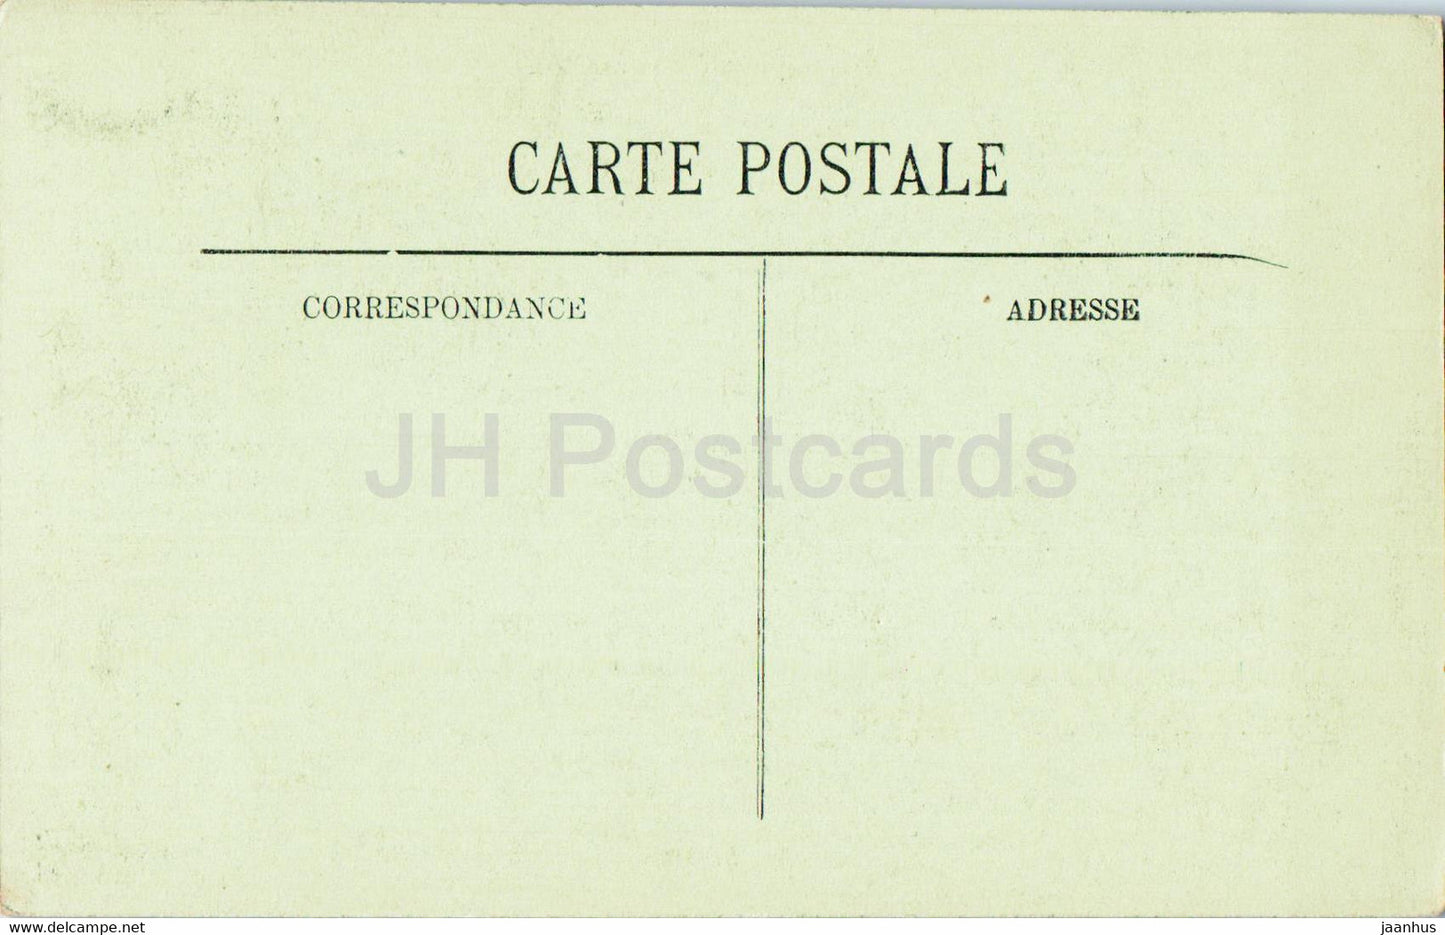 Soleil couchant - 4032 - old postcard - France - unused